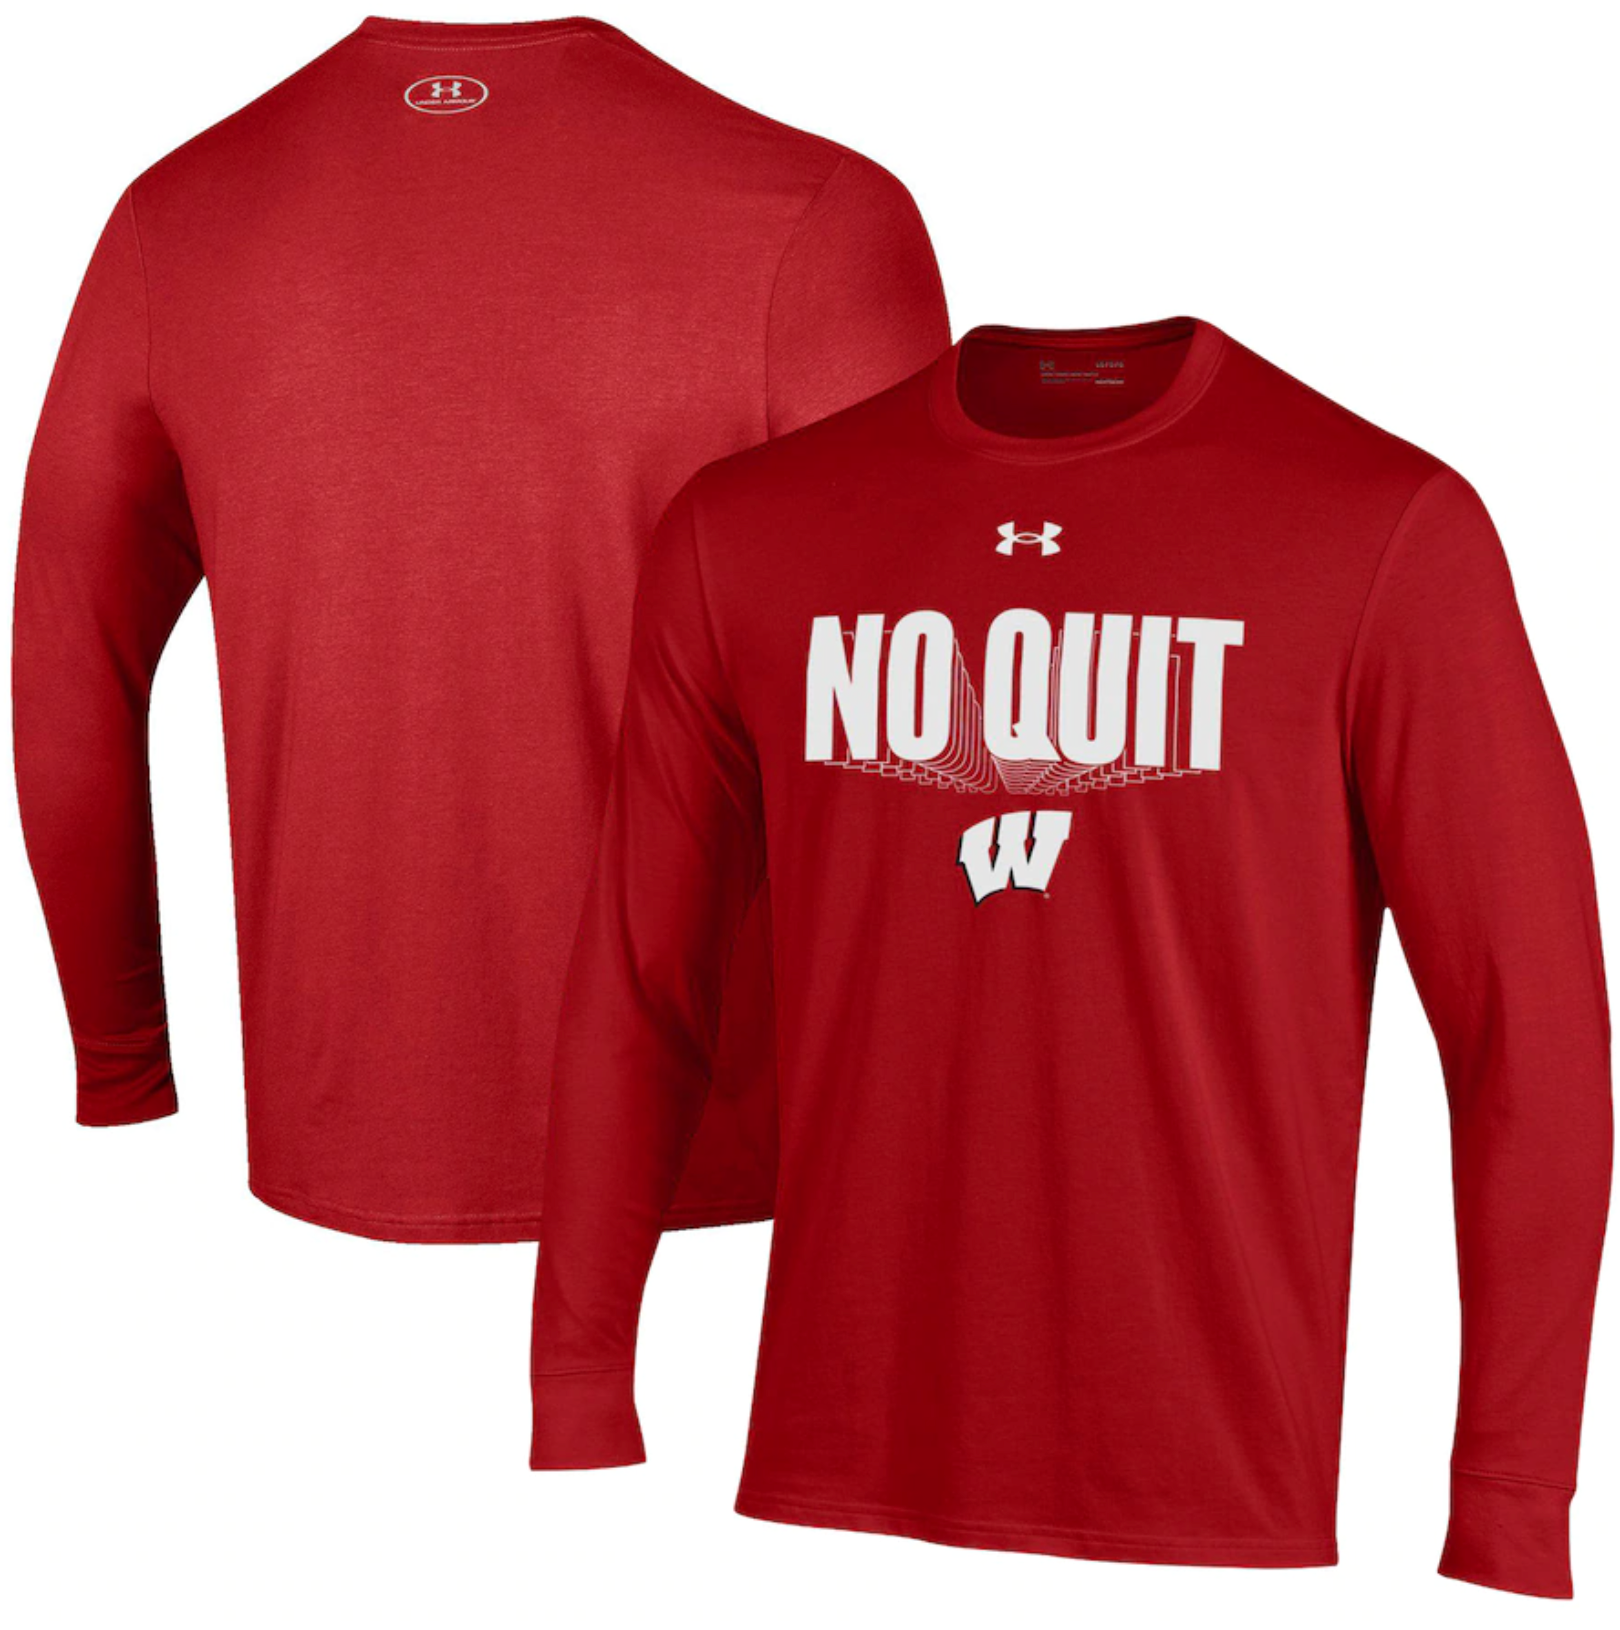 NCAA Shop Basketball Gear & Bench T-Shirts, NCAA Shop March